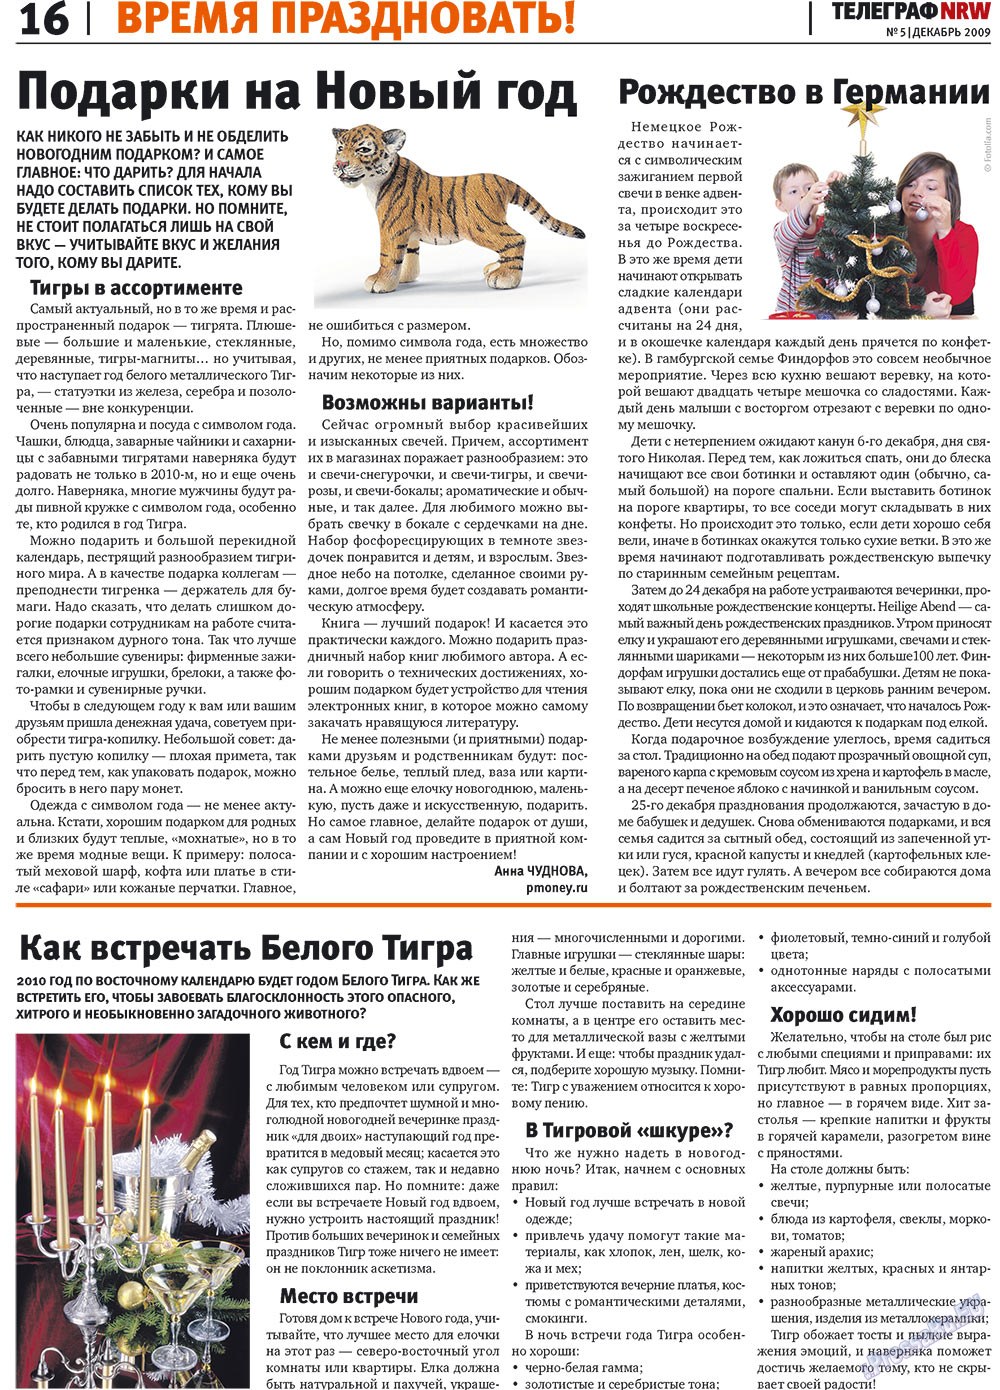 Телеграф NRW, газета. 2009 №5 стр.16